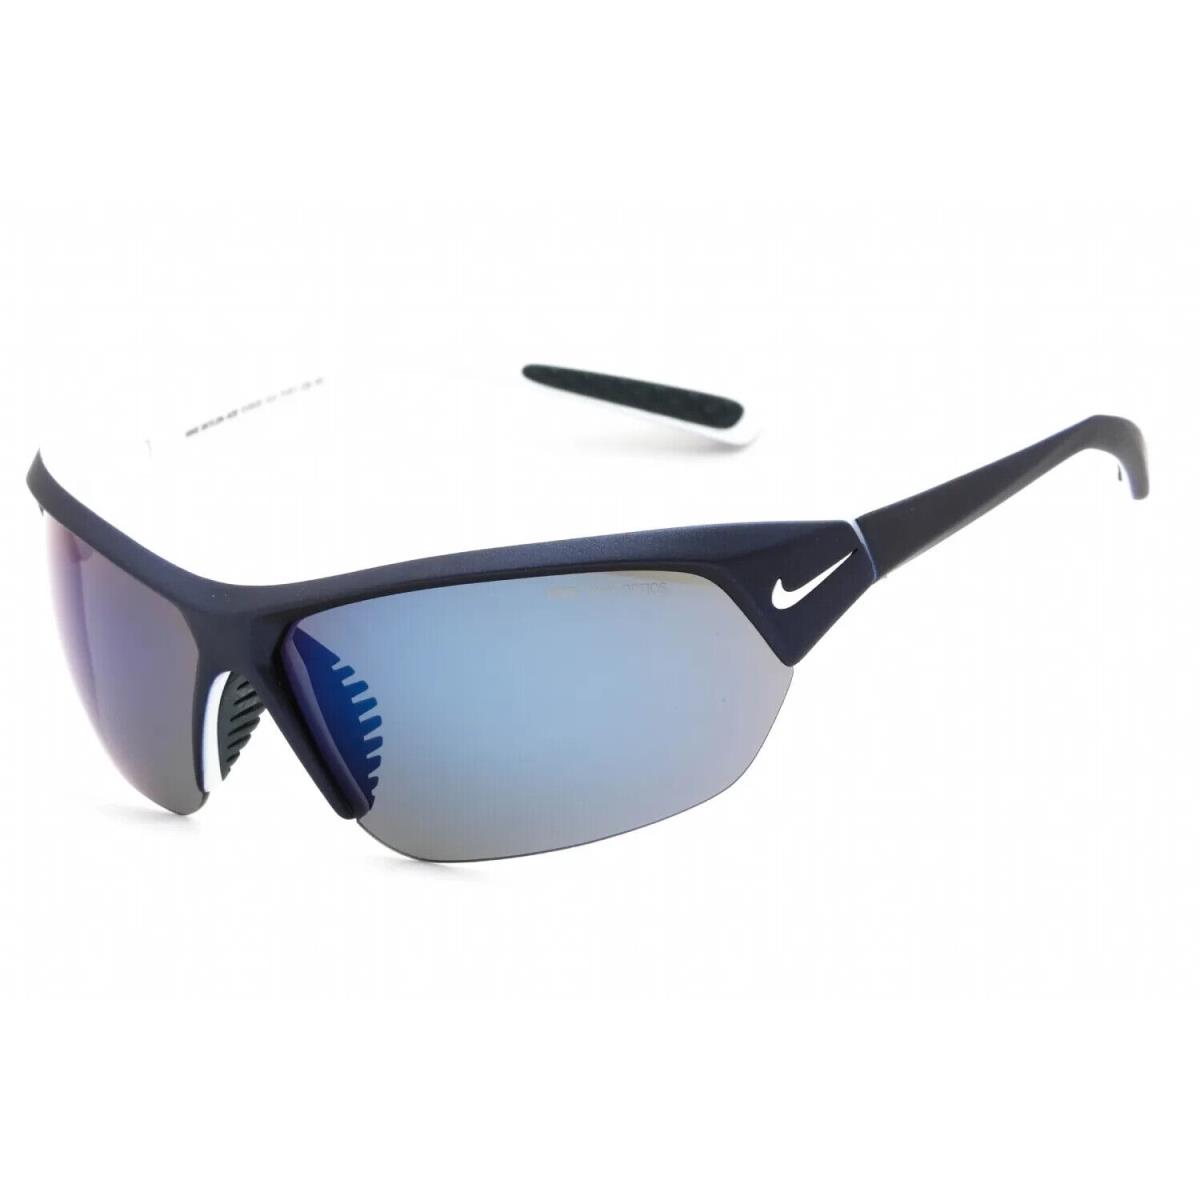 Nike Skylon Ace Sunglasses Sport Sunglasses Blue Mirror EV0525-414-69